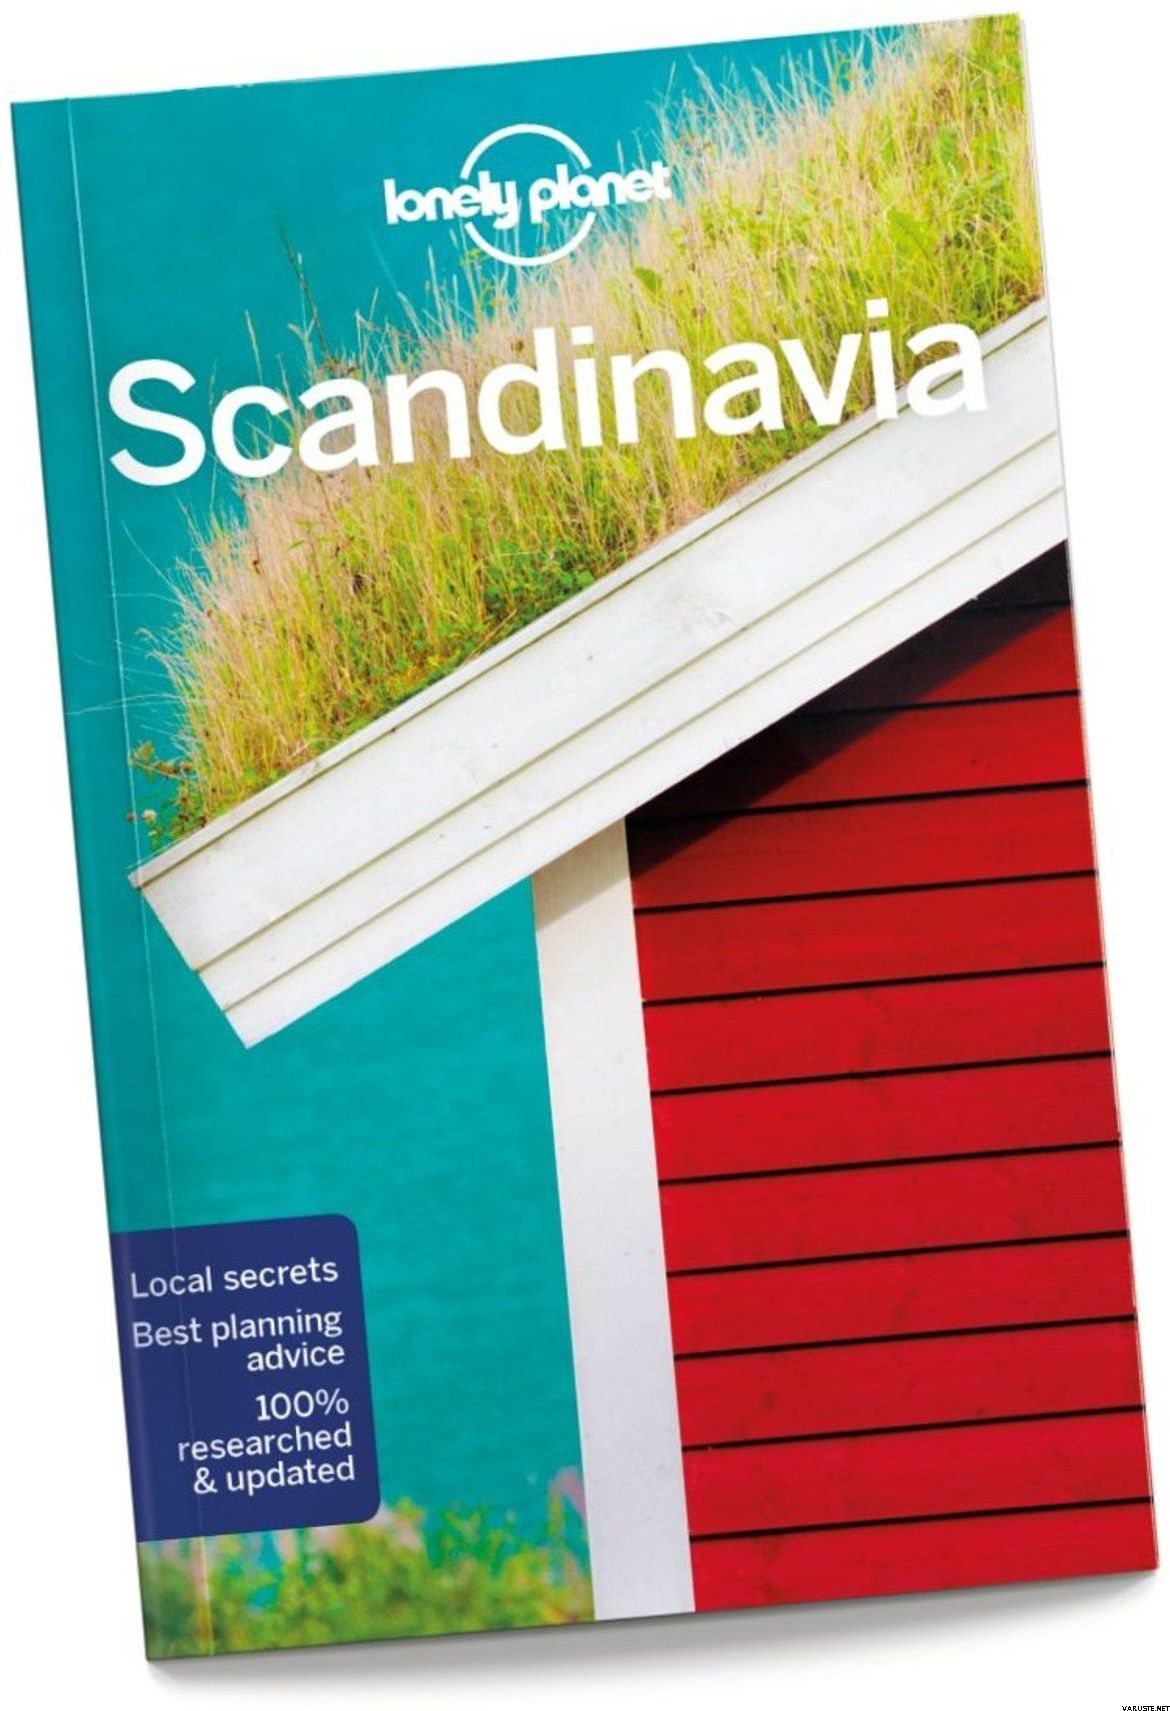 Lonely Planet Scandinavia, Guide turistiche Europee